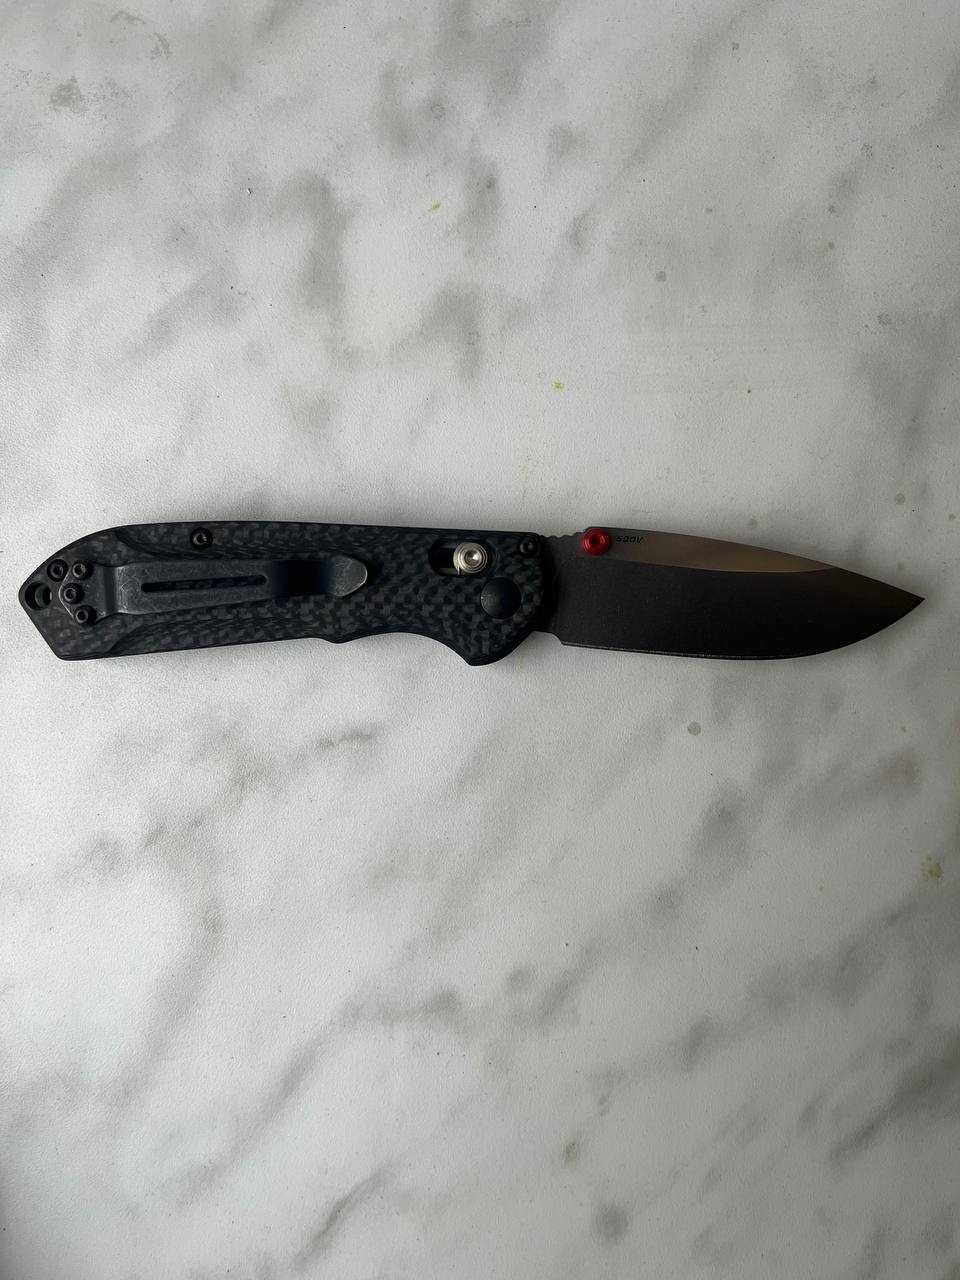 Нож Benchmade 565-1 Mini Freek Carbon Fiber S90V